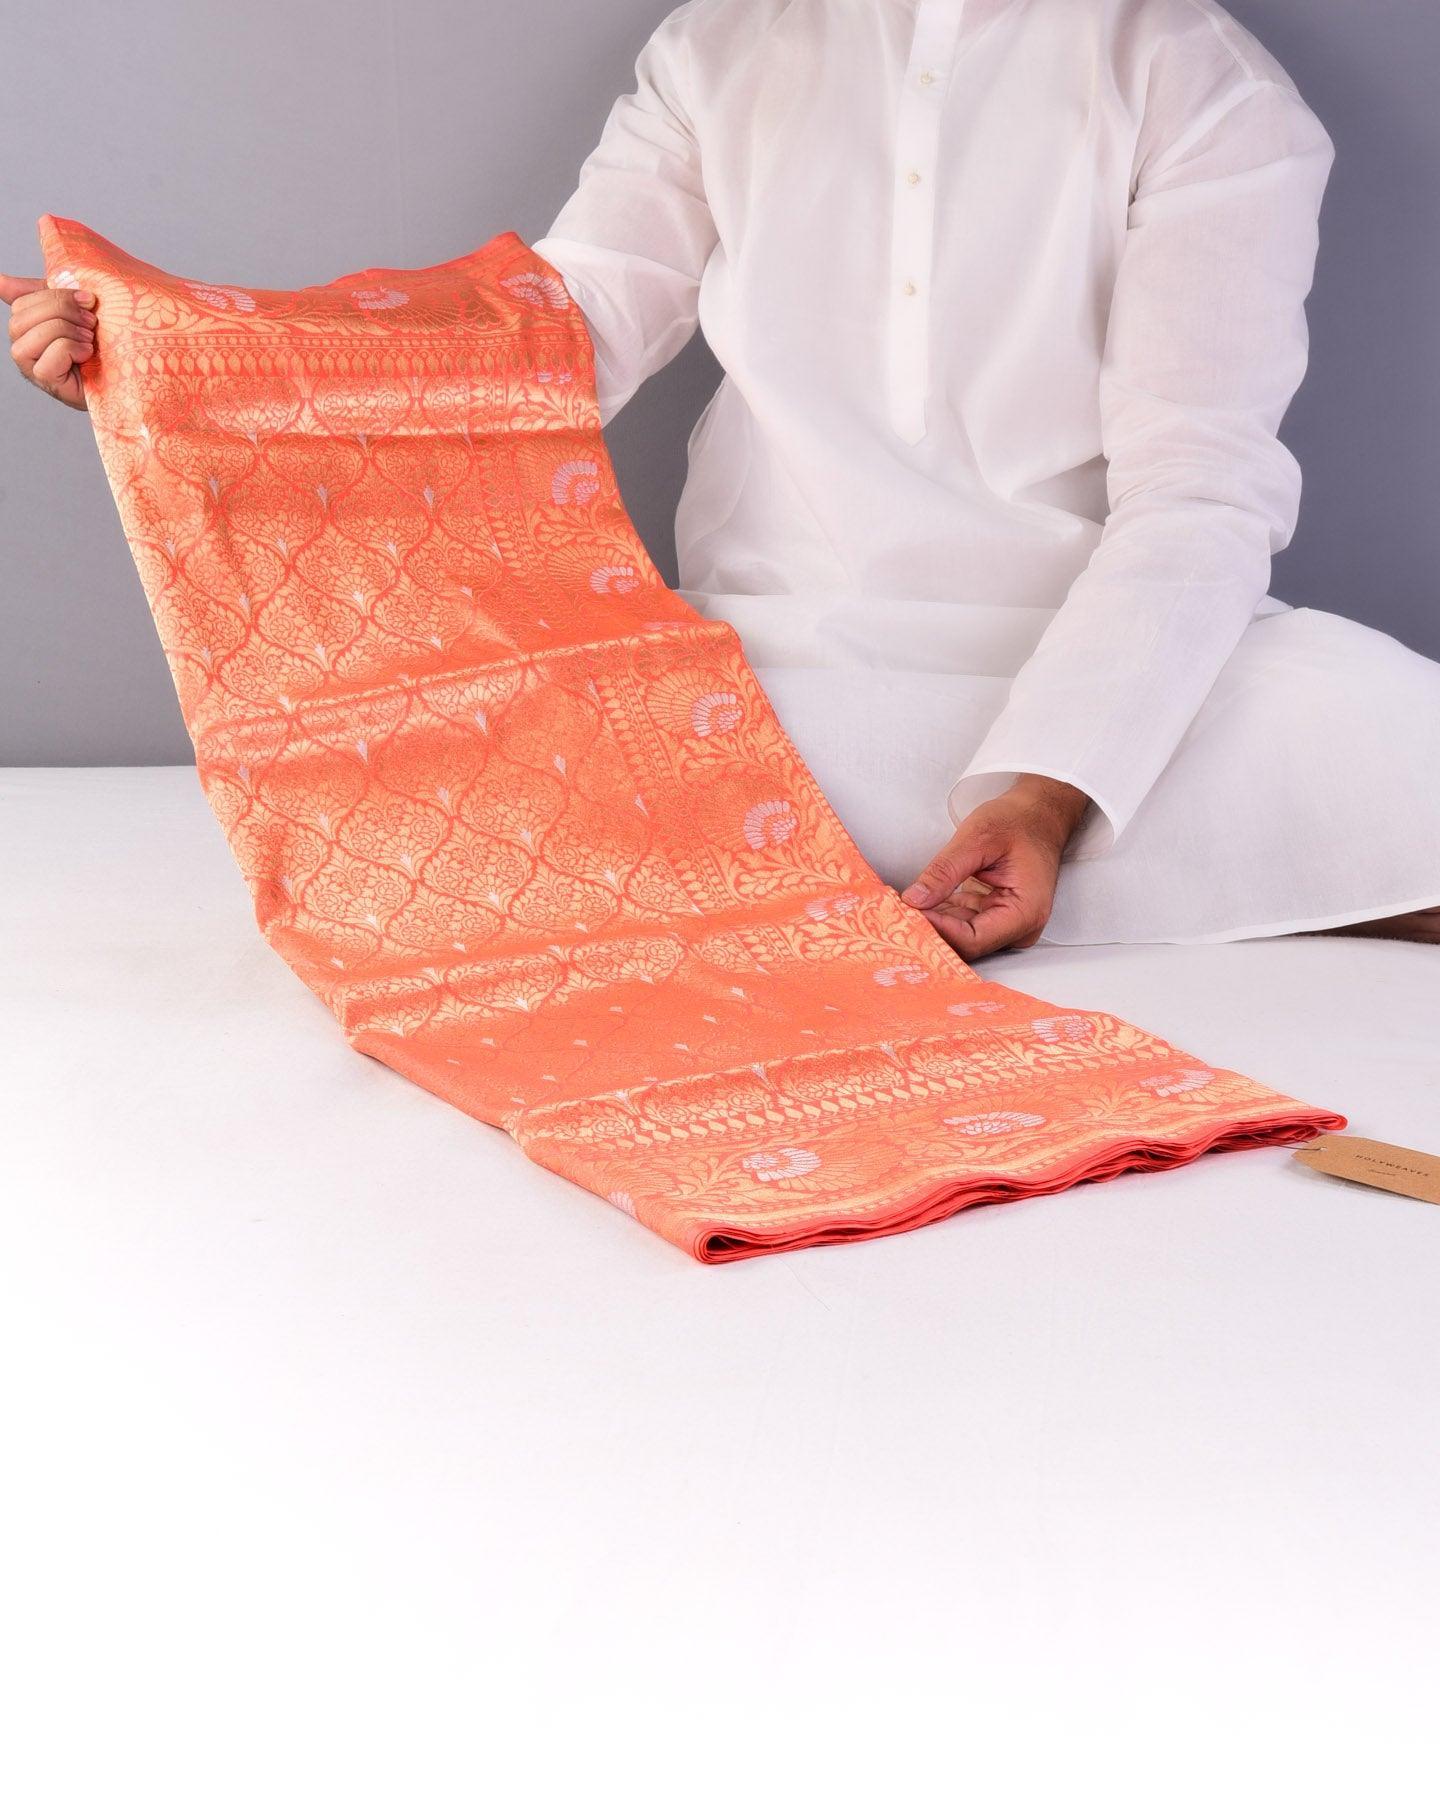 Peach Banarasi Alfi Sona Rupa Jaal Cutwork Brocade Handwoven Katan Silk Saree - By HolyWeaves, Benares